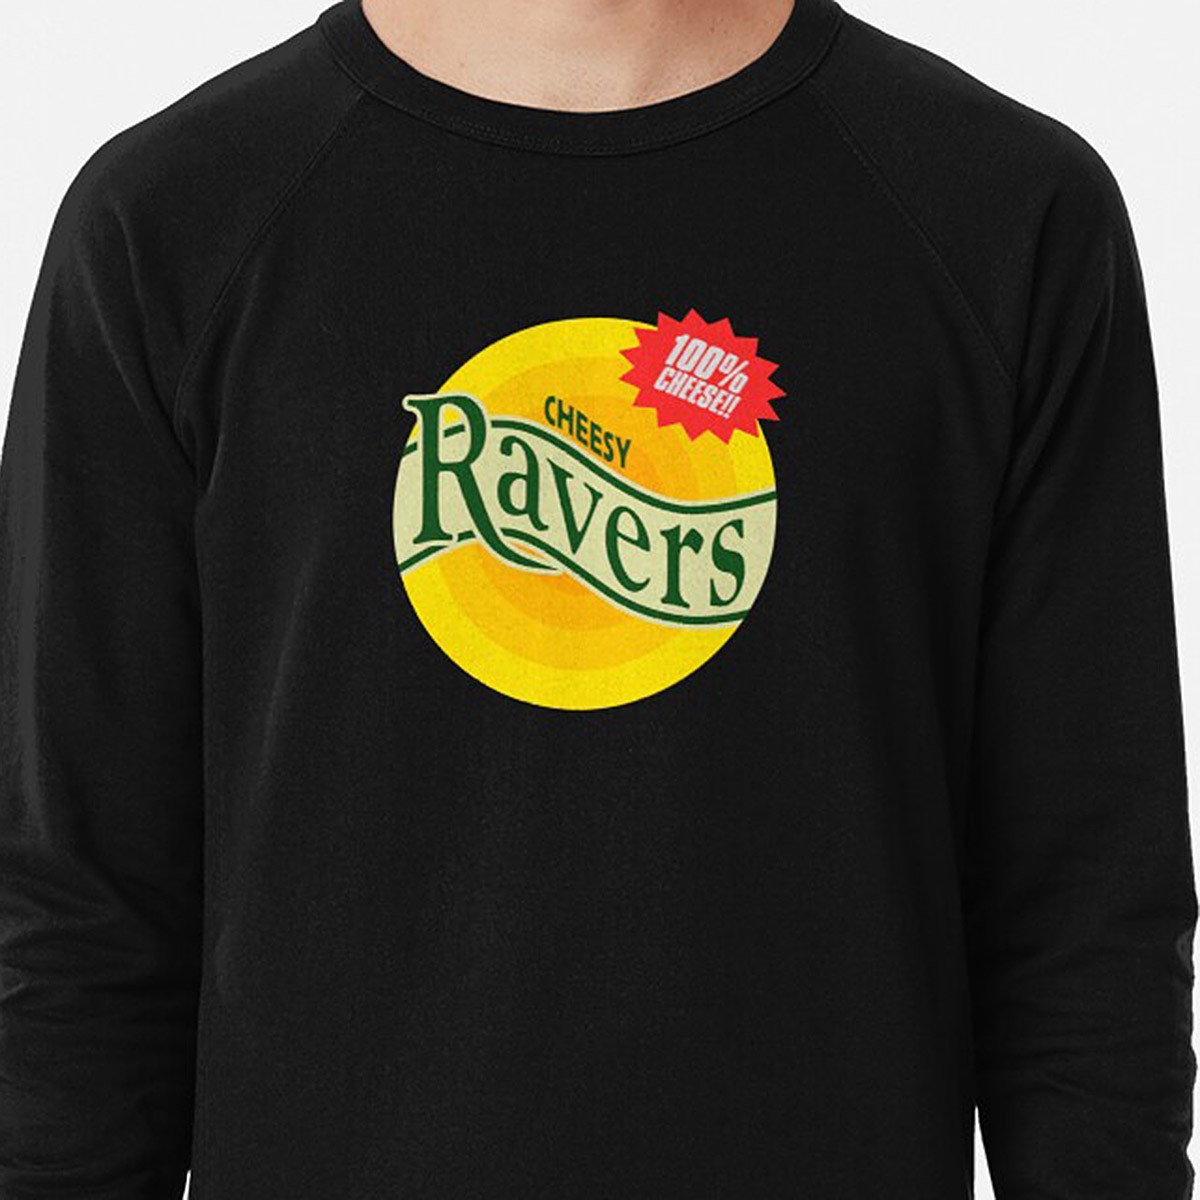 100% Cheesy Ravers!  Lightweight Sweatshirt by NTK Apparel